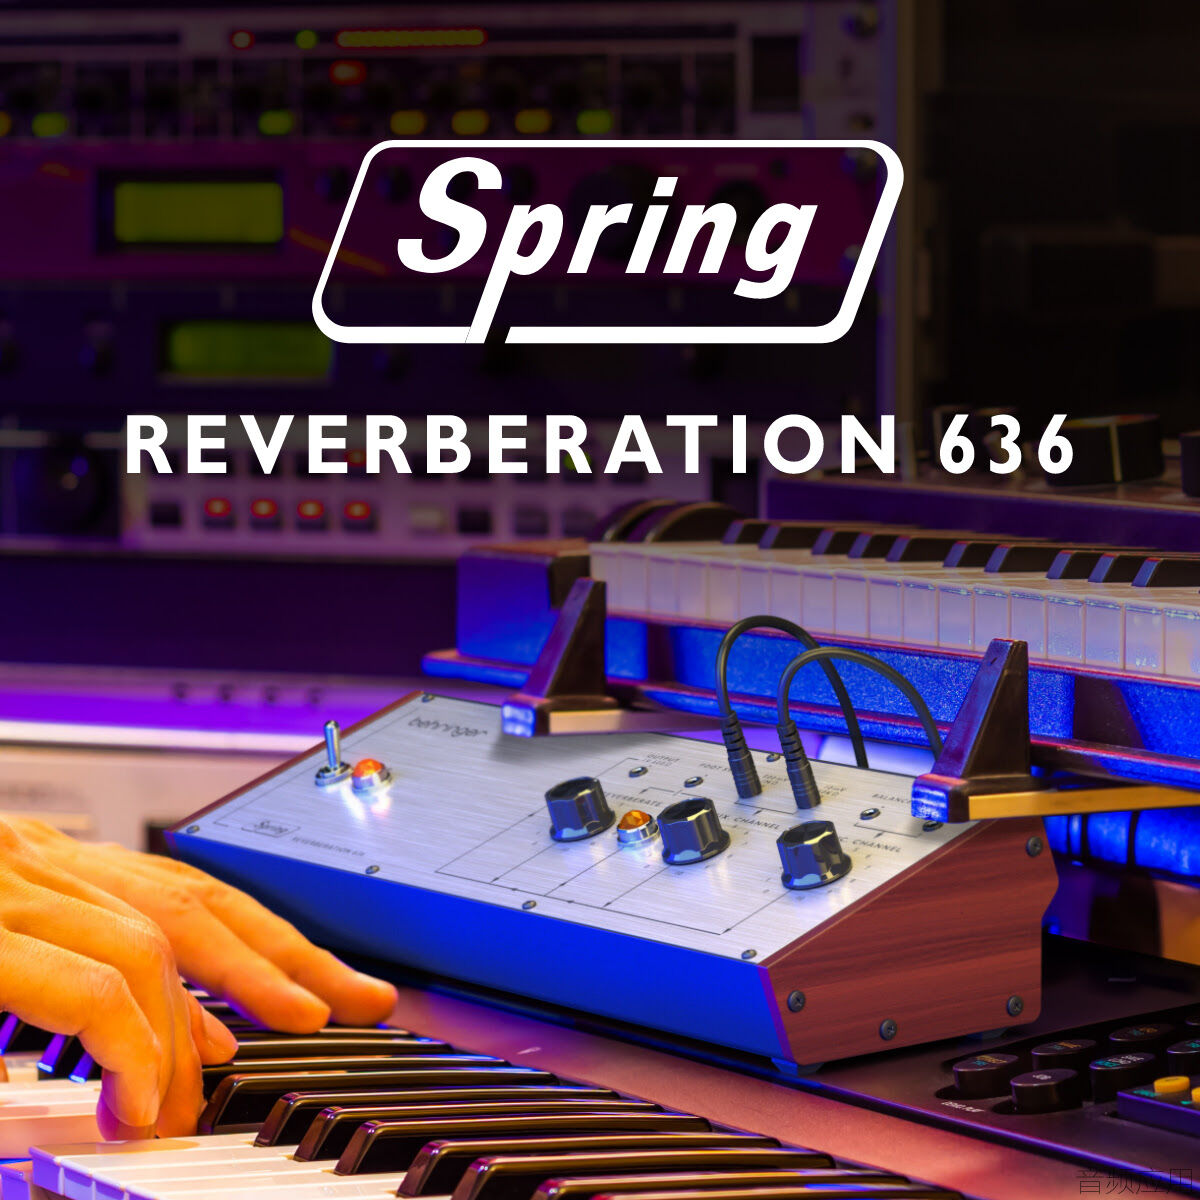 1102110d1706629010-behringer-announces-spring-reverberation-636-a-unnamed.jpg